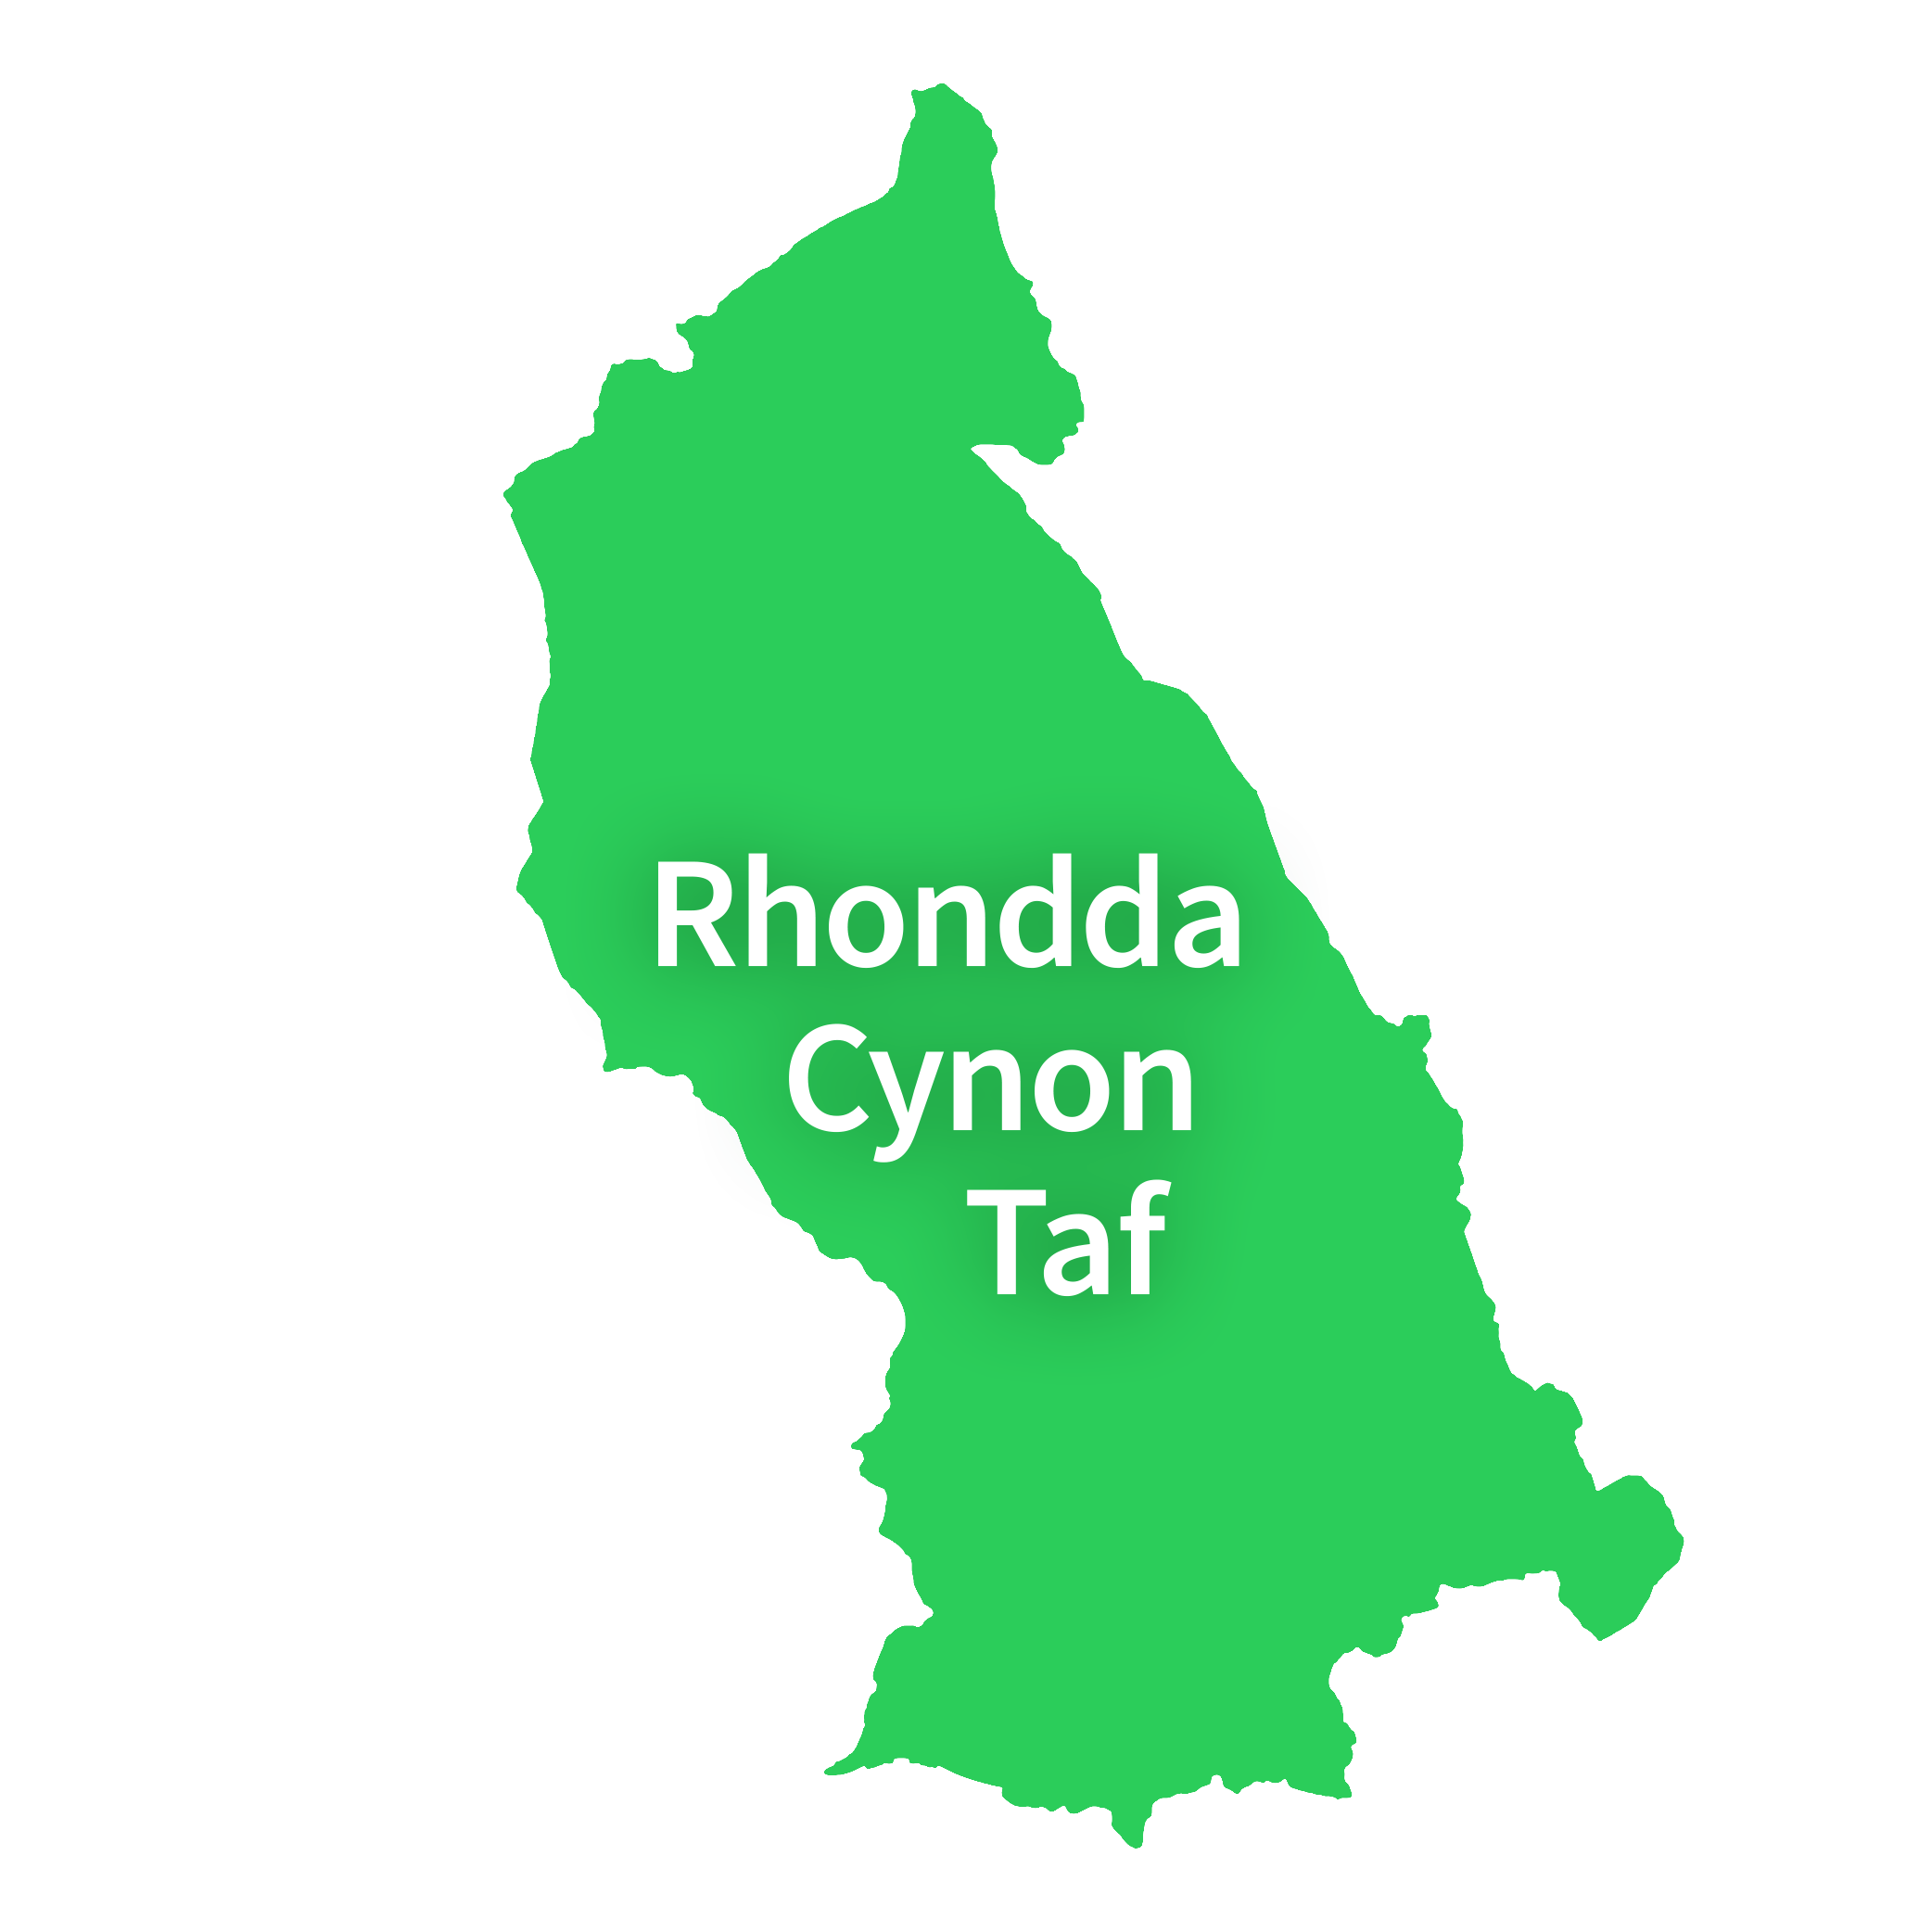 Map of Rhondda Cynon Taf